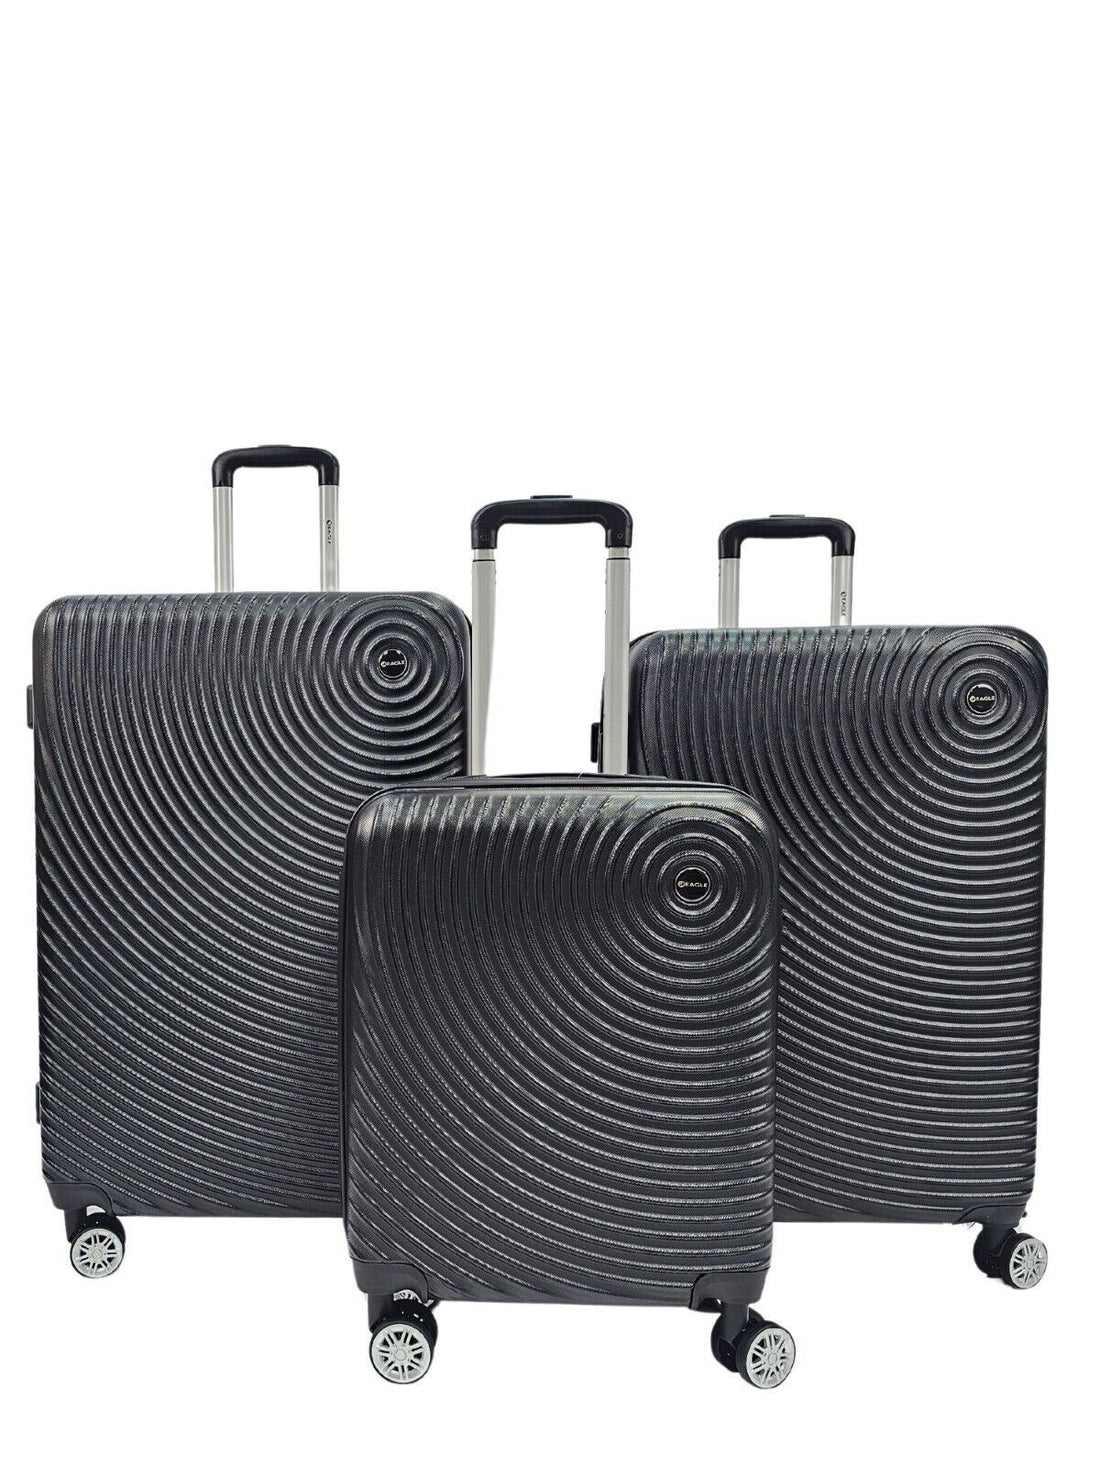 Hard Shell Black Cabin Suitcase Set 8 Wheel Luggage Case Travel Bag - Upperclass Fashions 